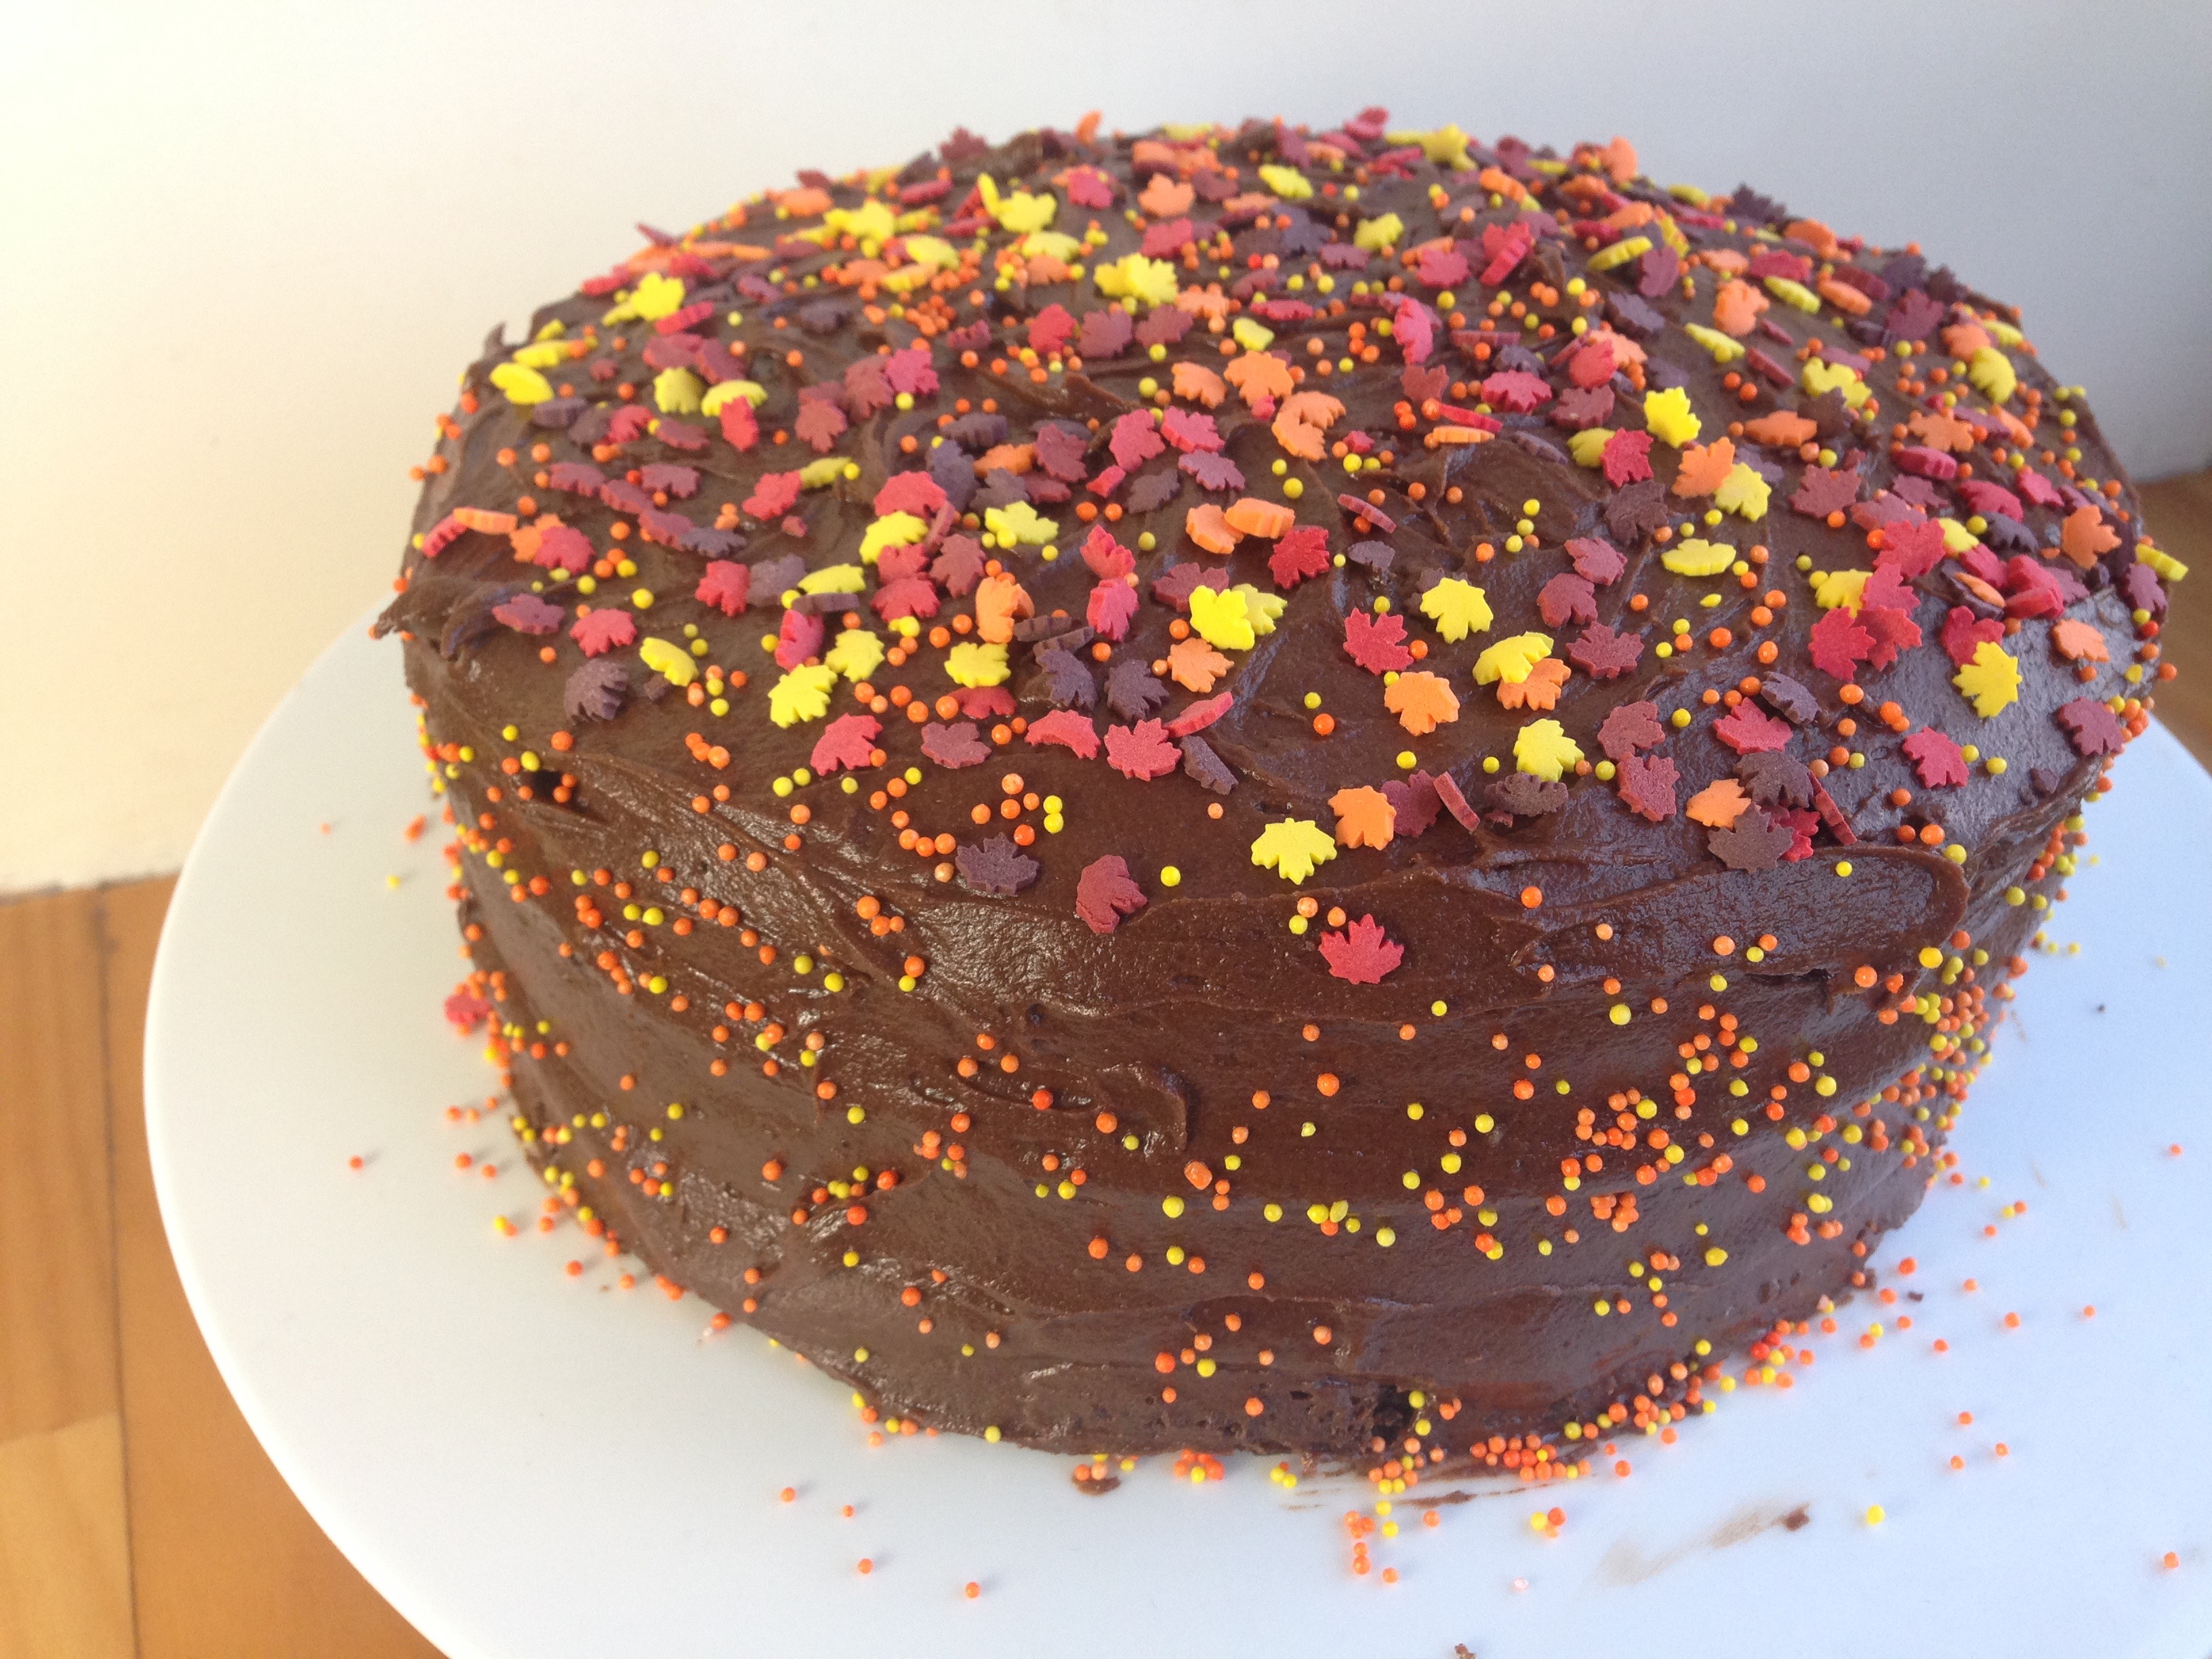 How to bake a moist chocolate cake